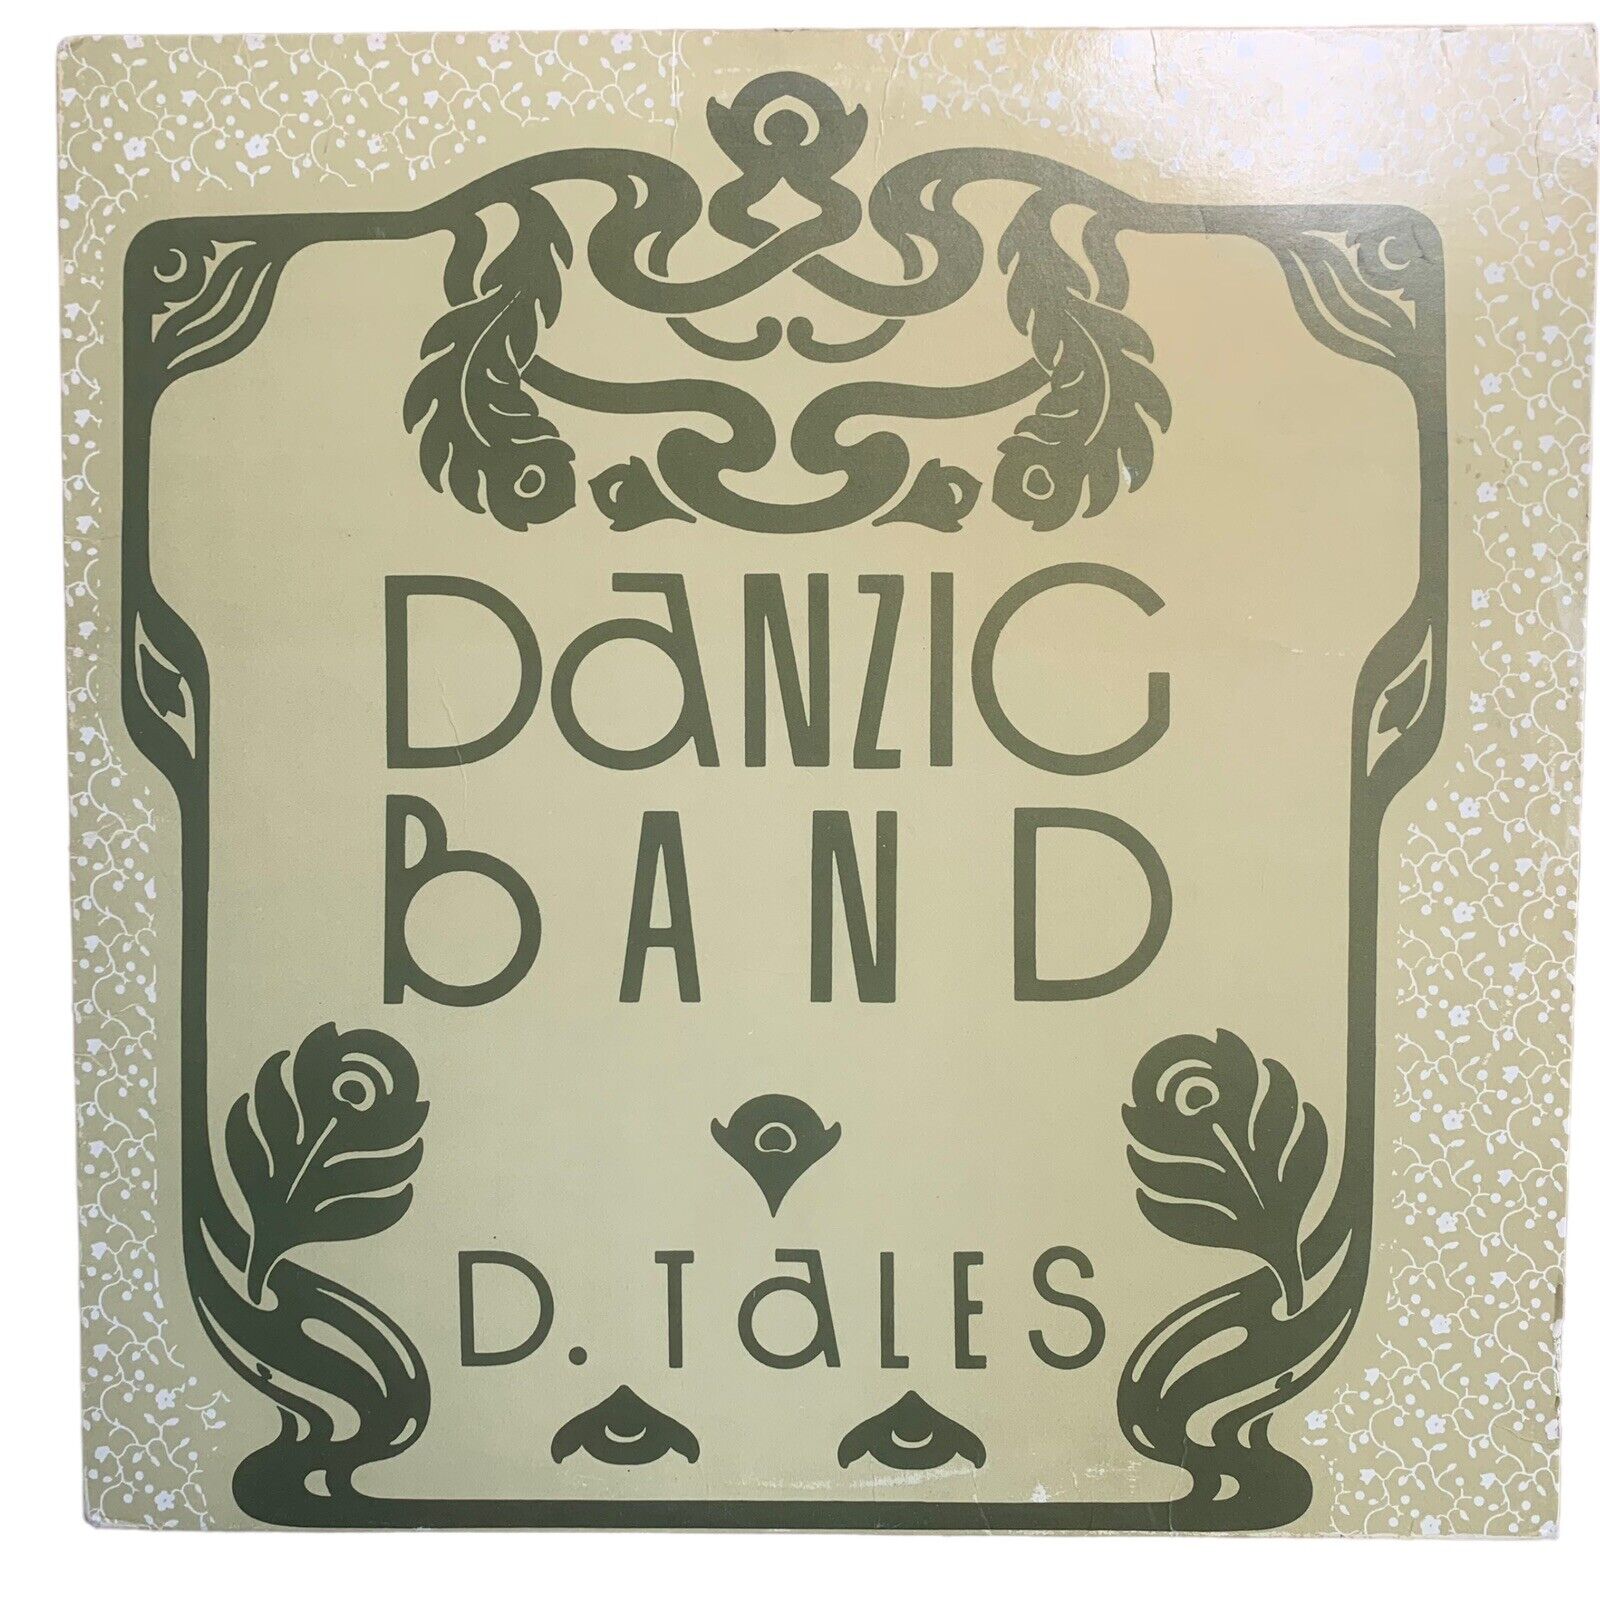 Danzig Band - D. Tales (VG/VG+) Signed Vinyl Record LP Fairhope, AL 